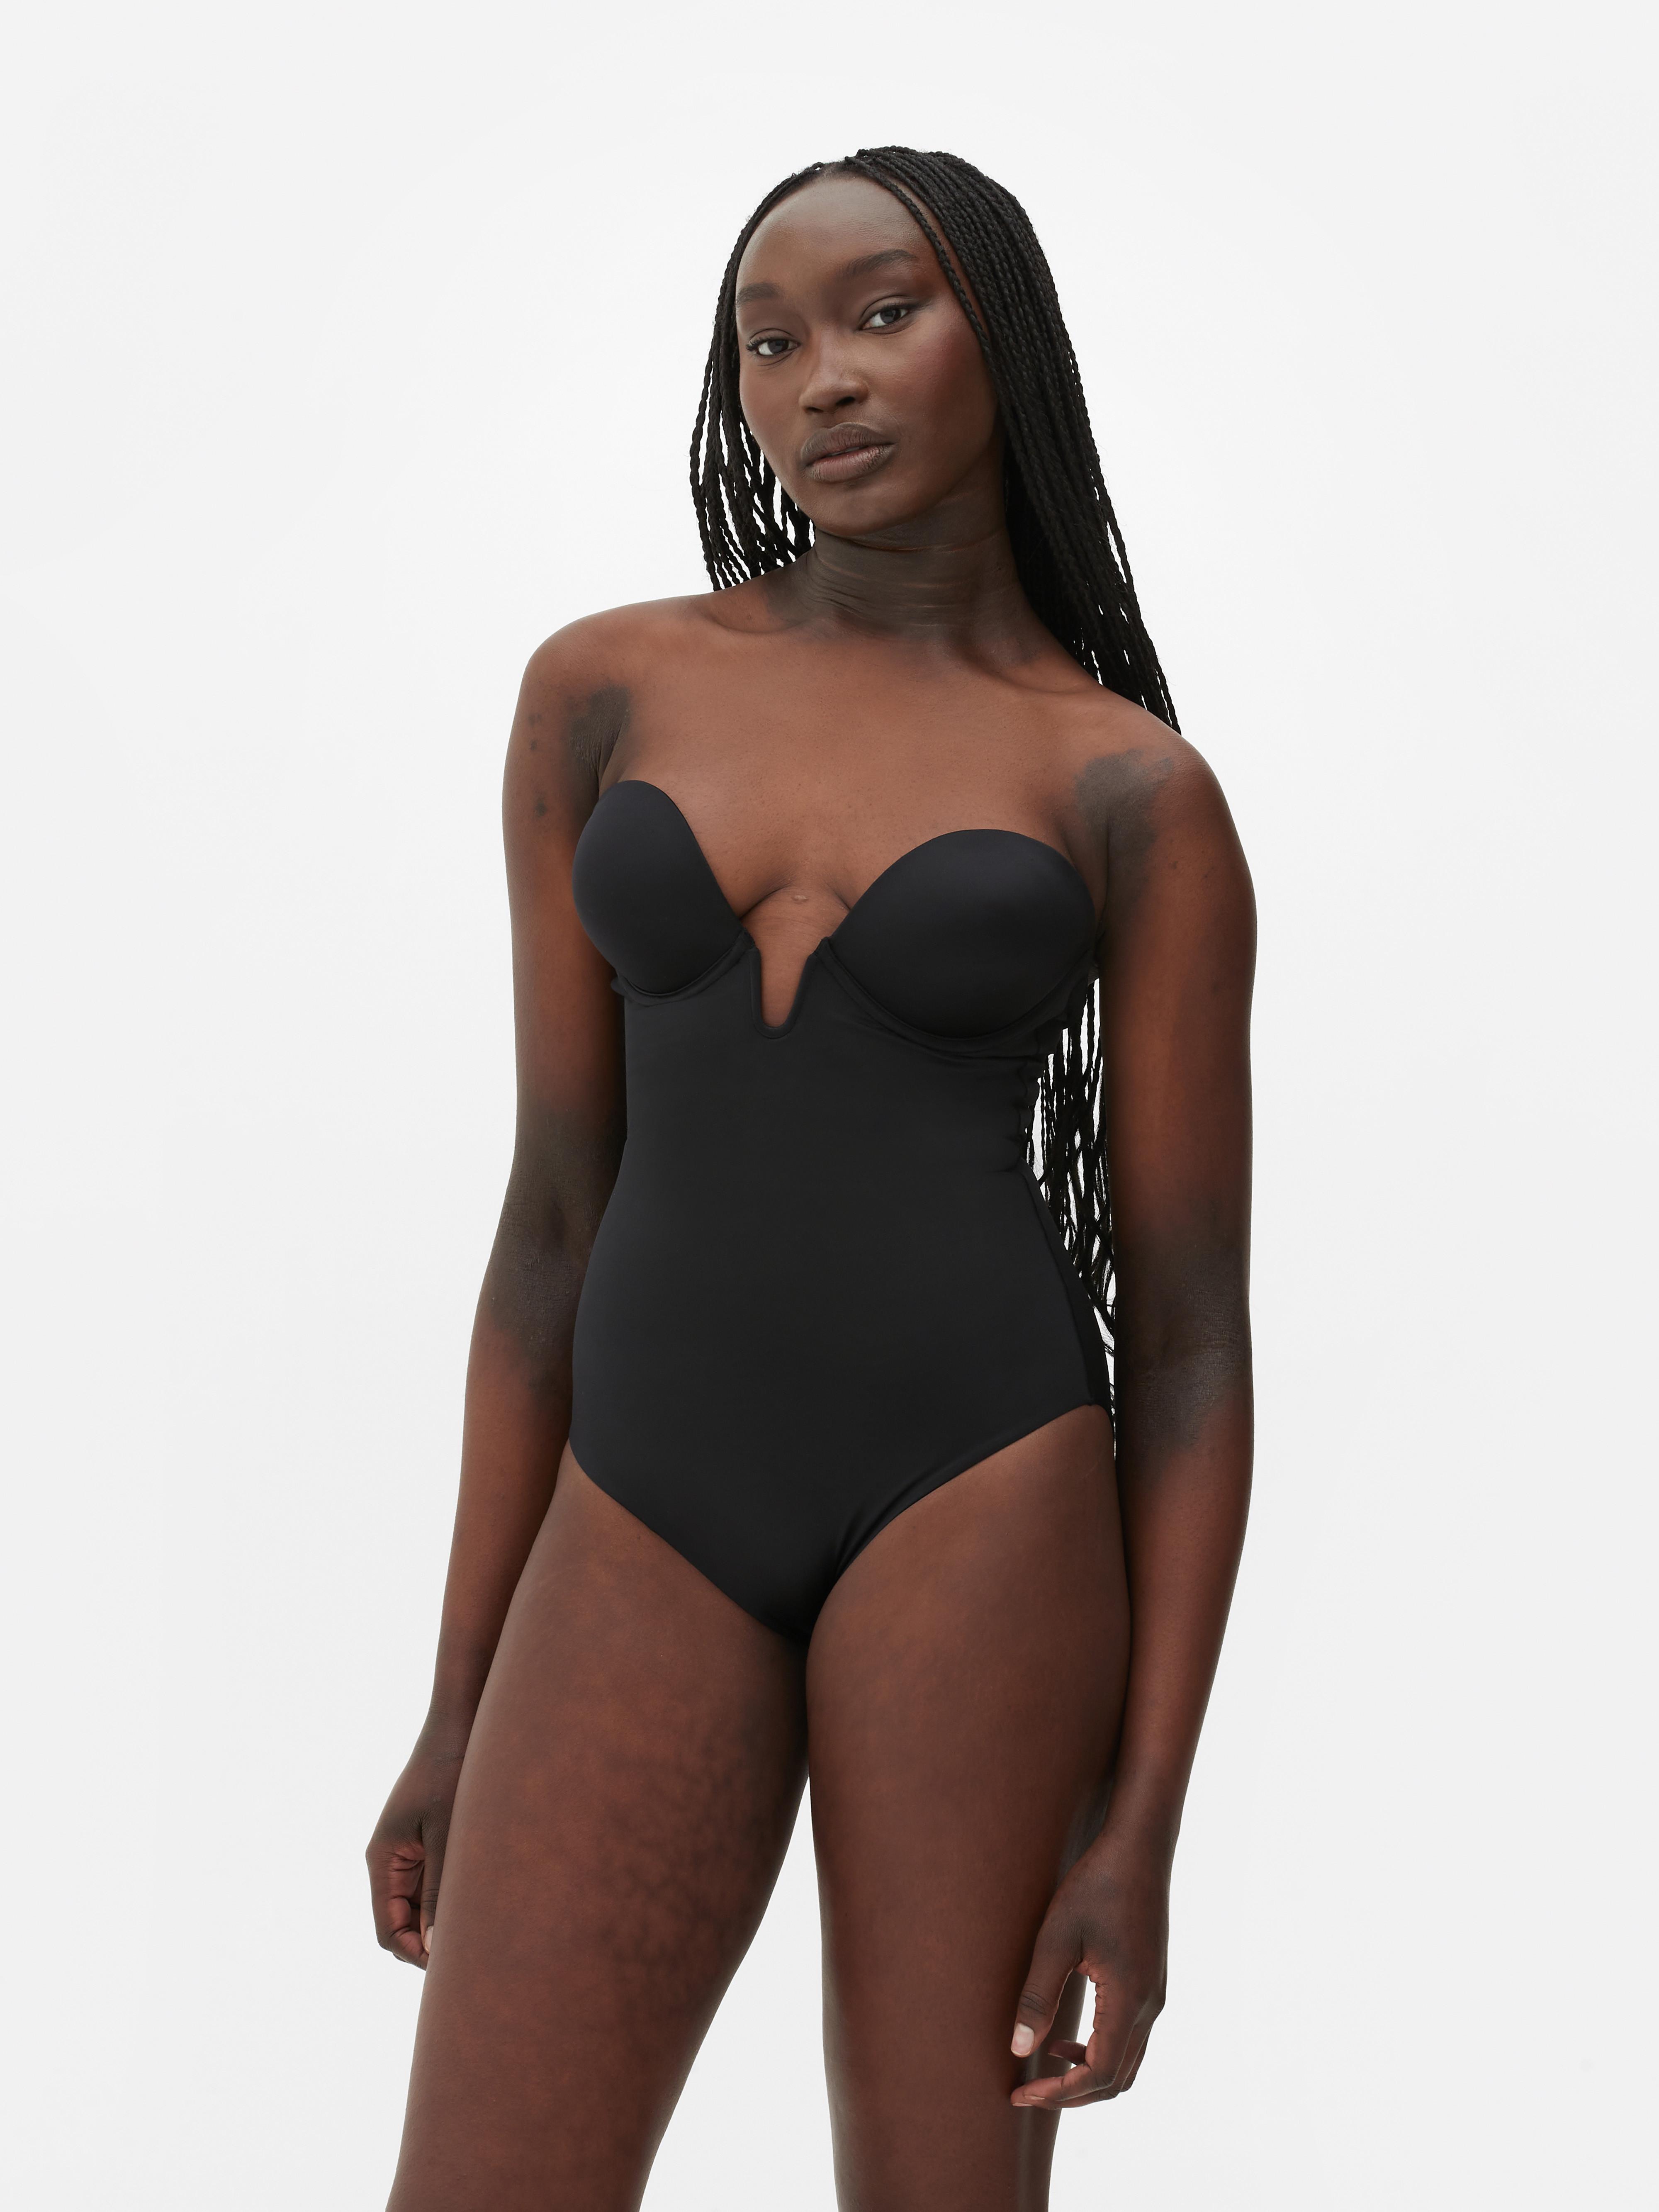 Primark Black Bodysuit Size M - 59% off